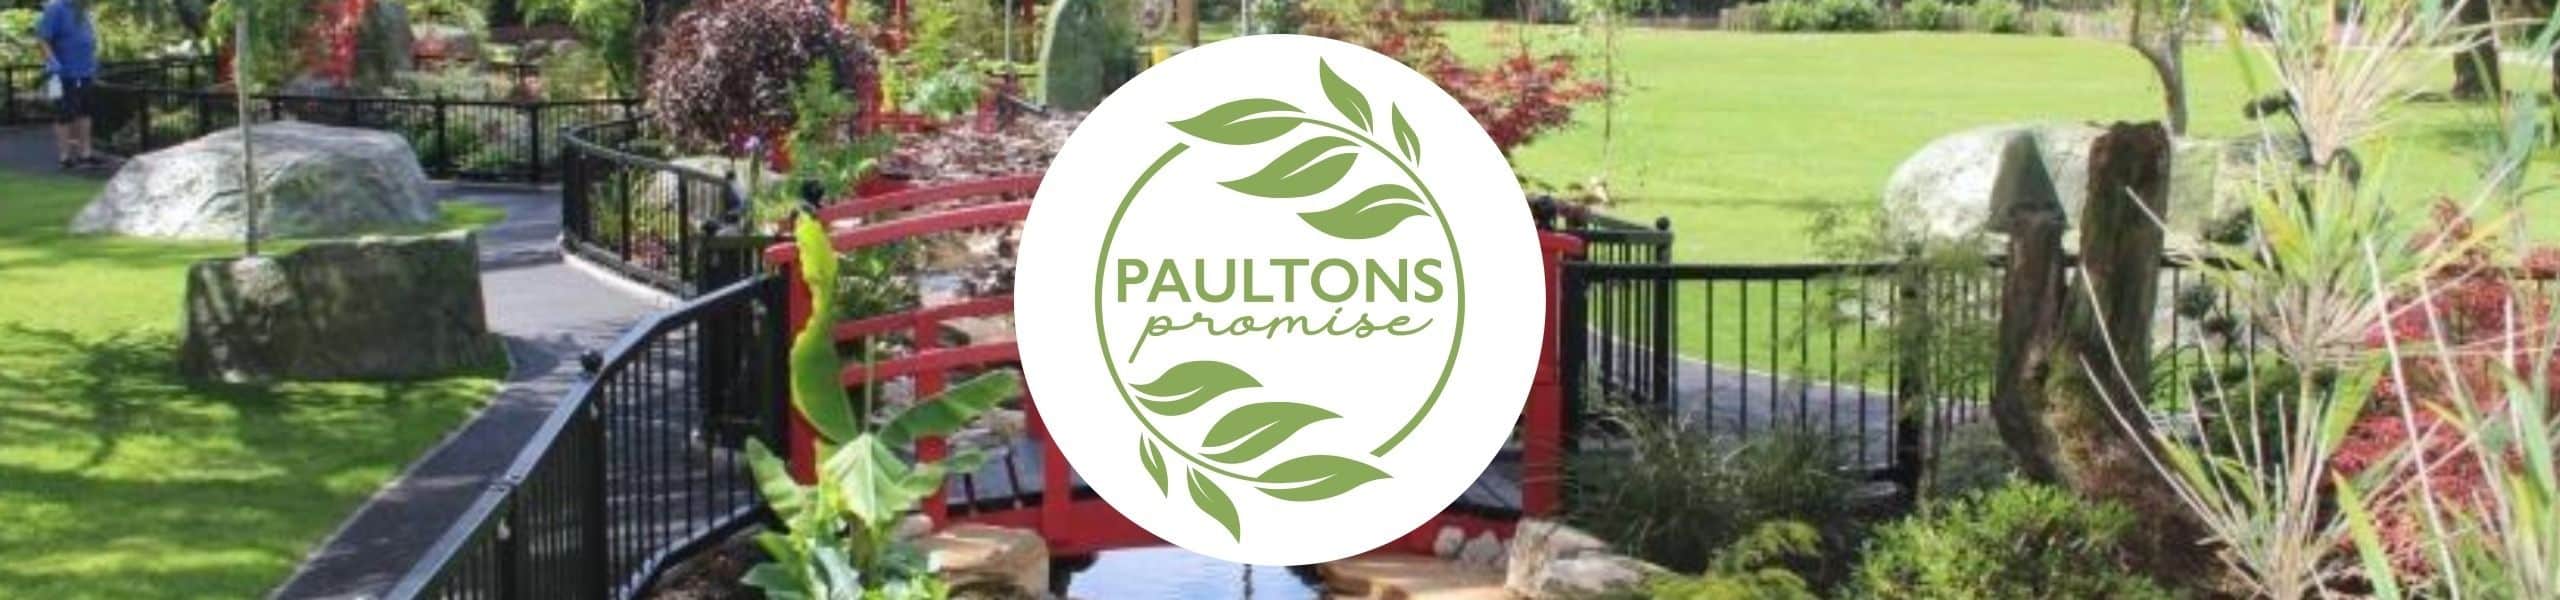 Paultons Promise